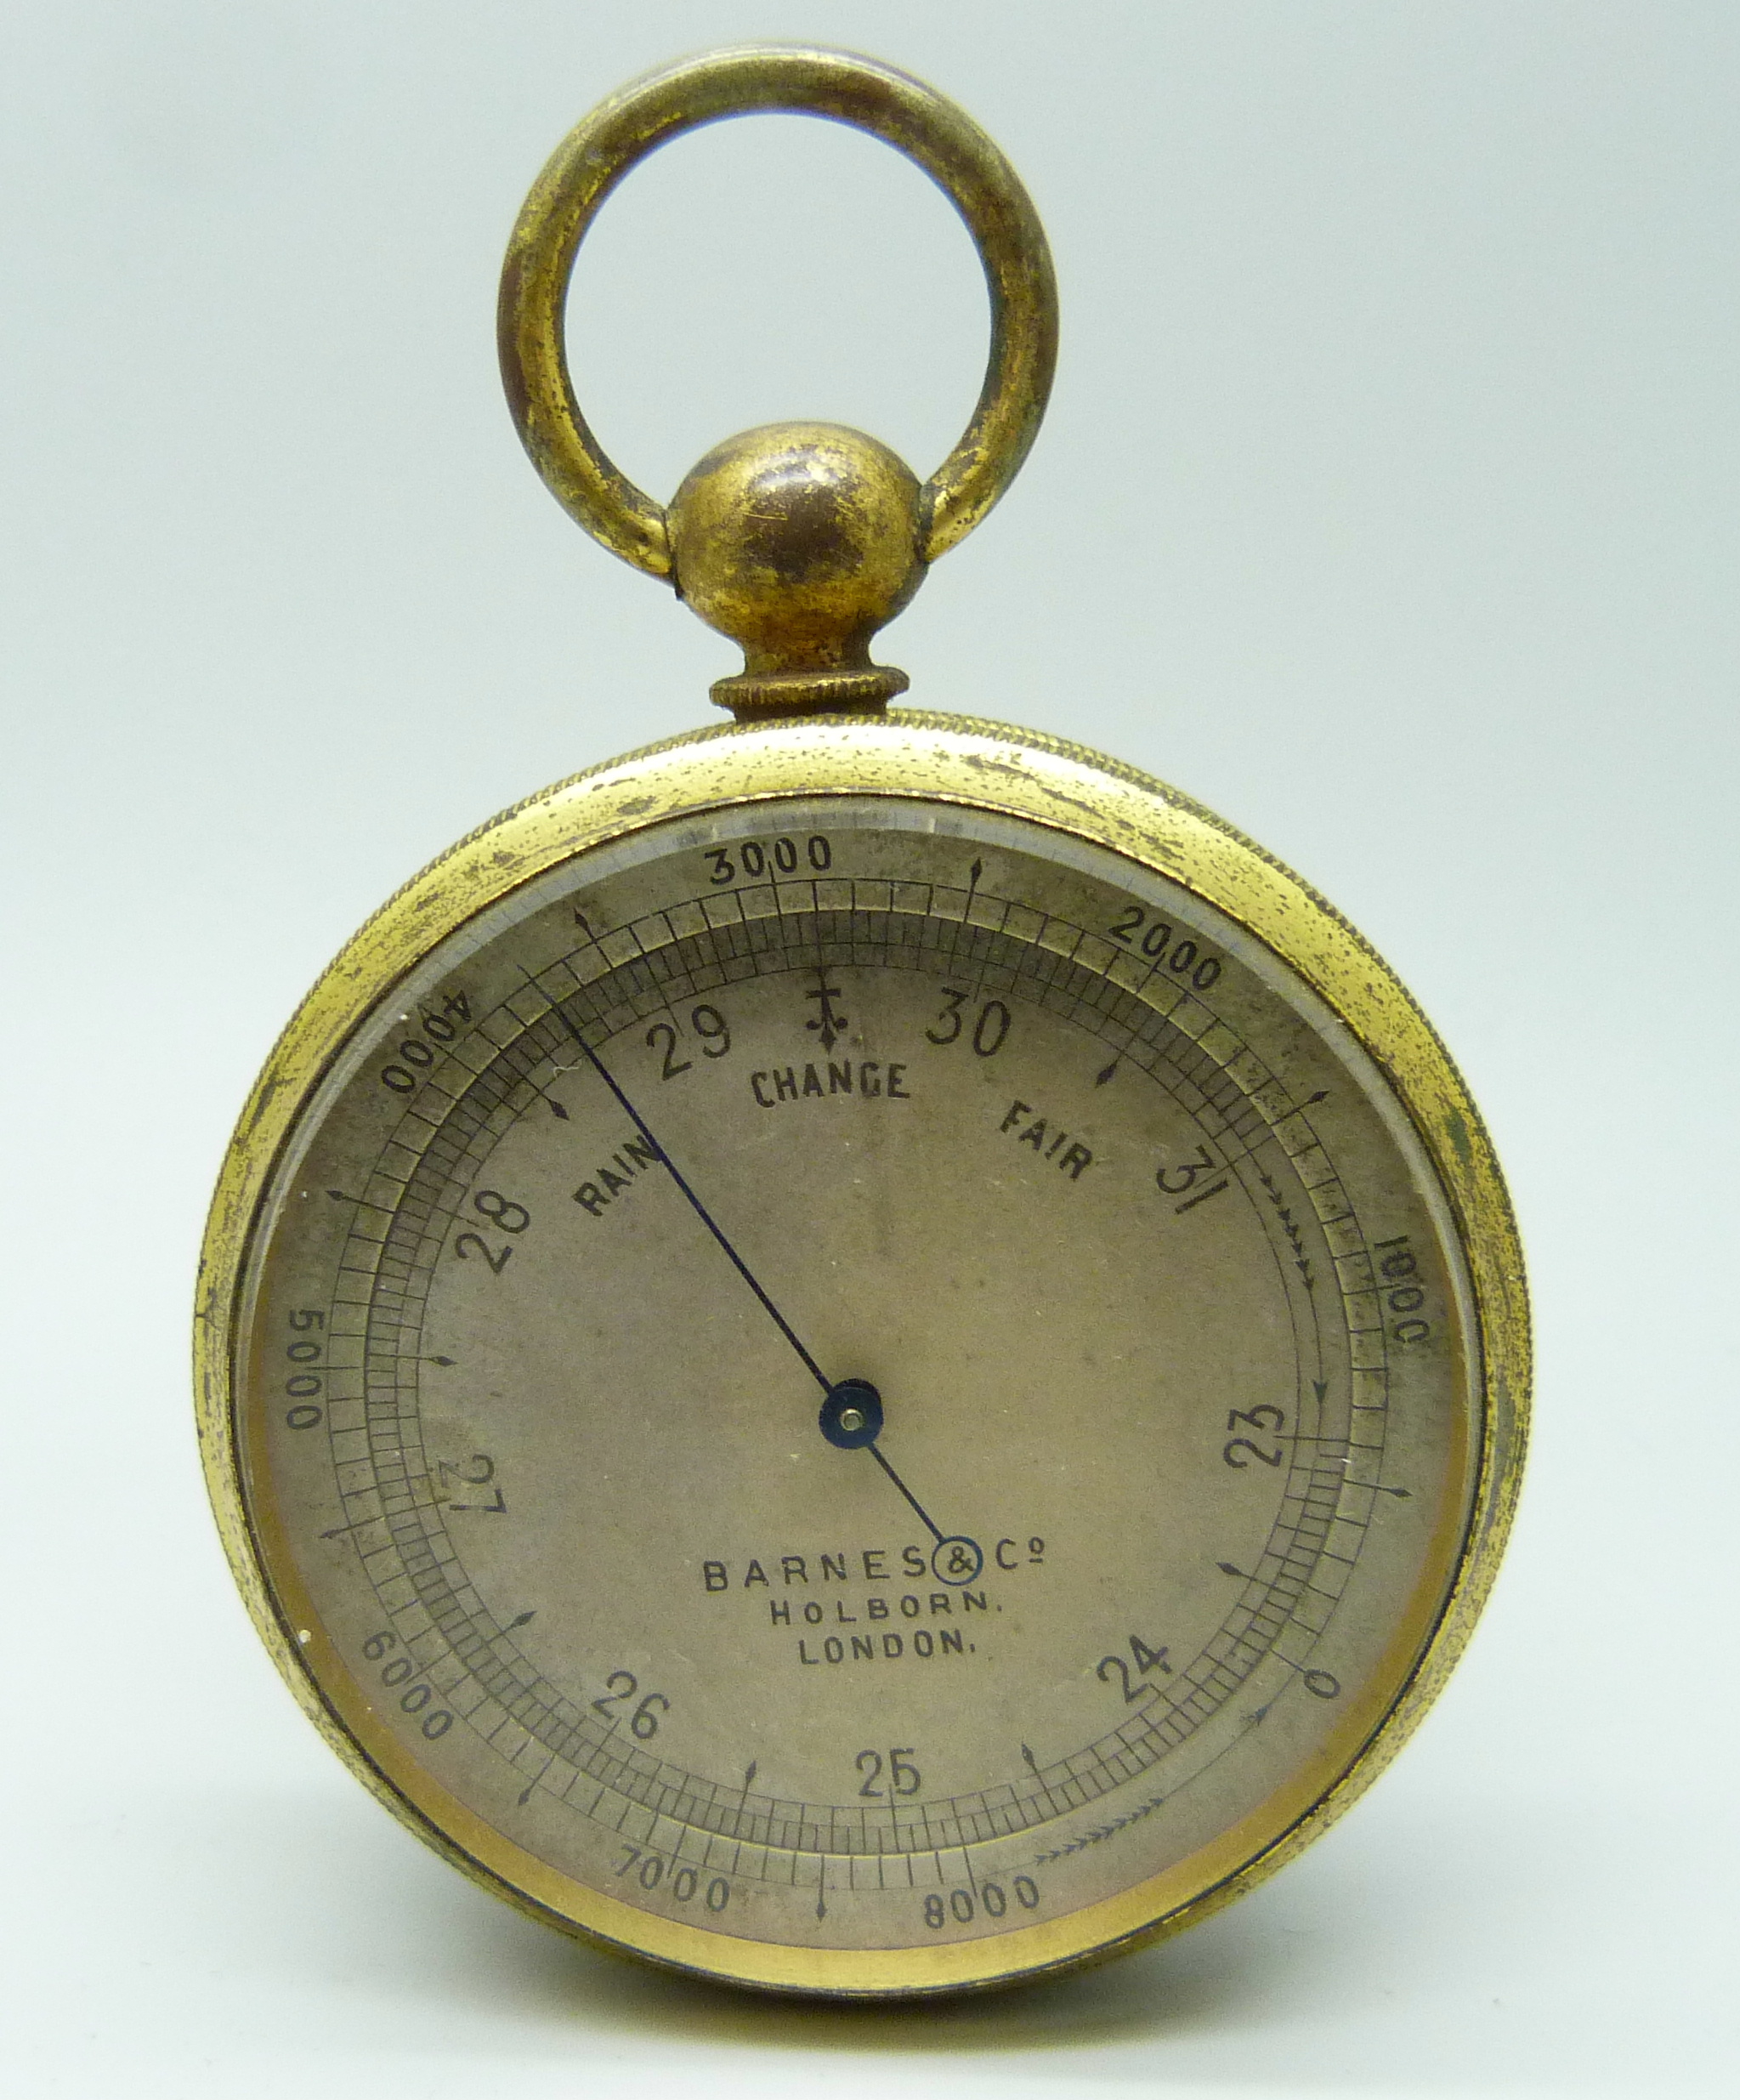 An Edwardian brass cased barometer by Barnes & Co., Holborn, London